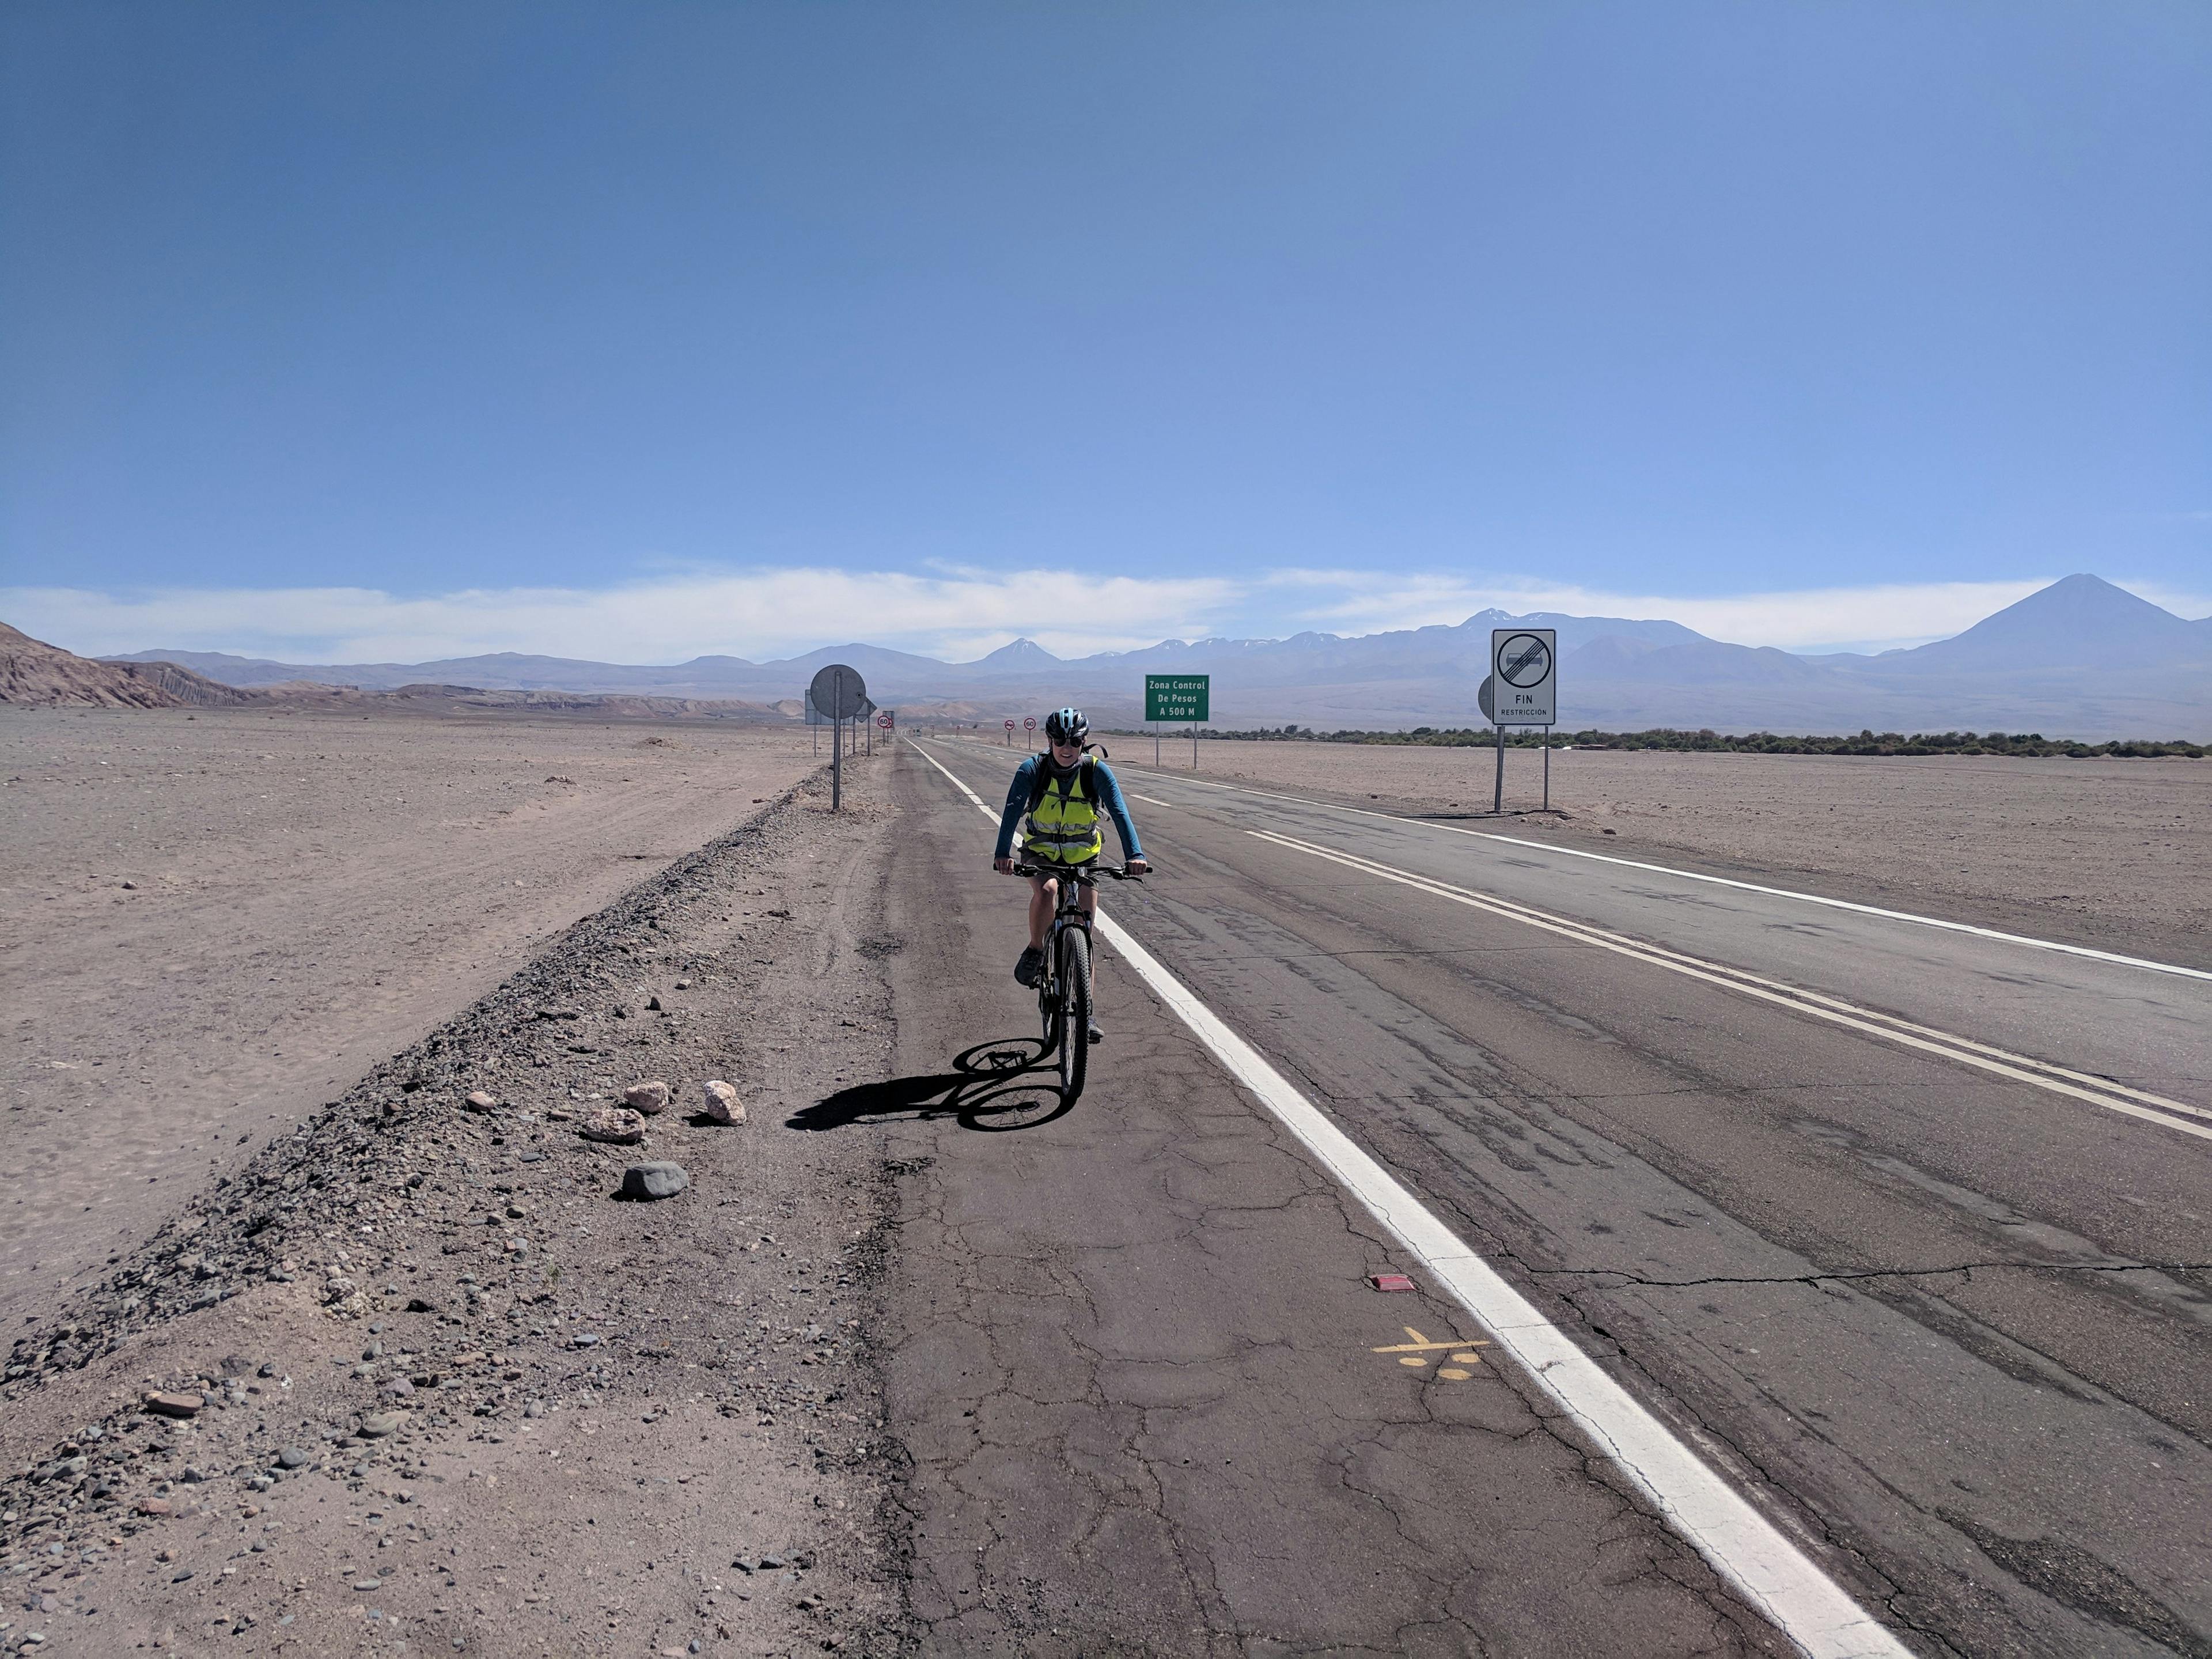 Lauren riding the rental bike through the desert